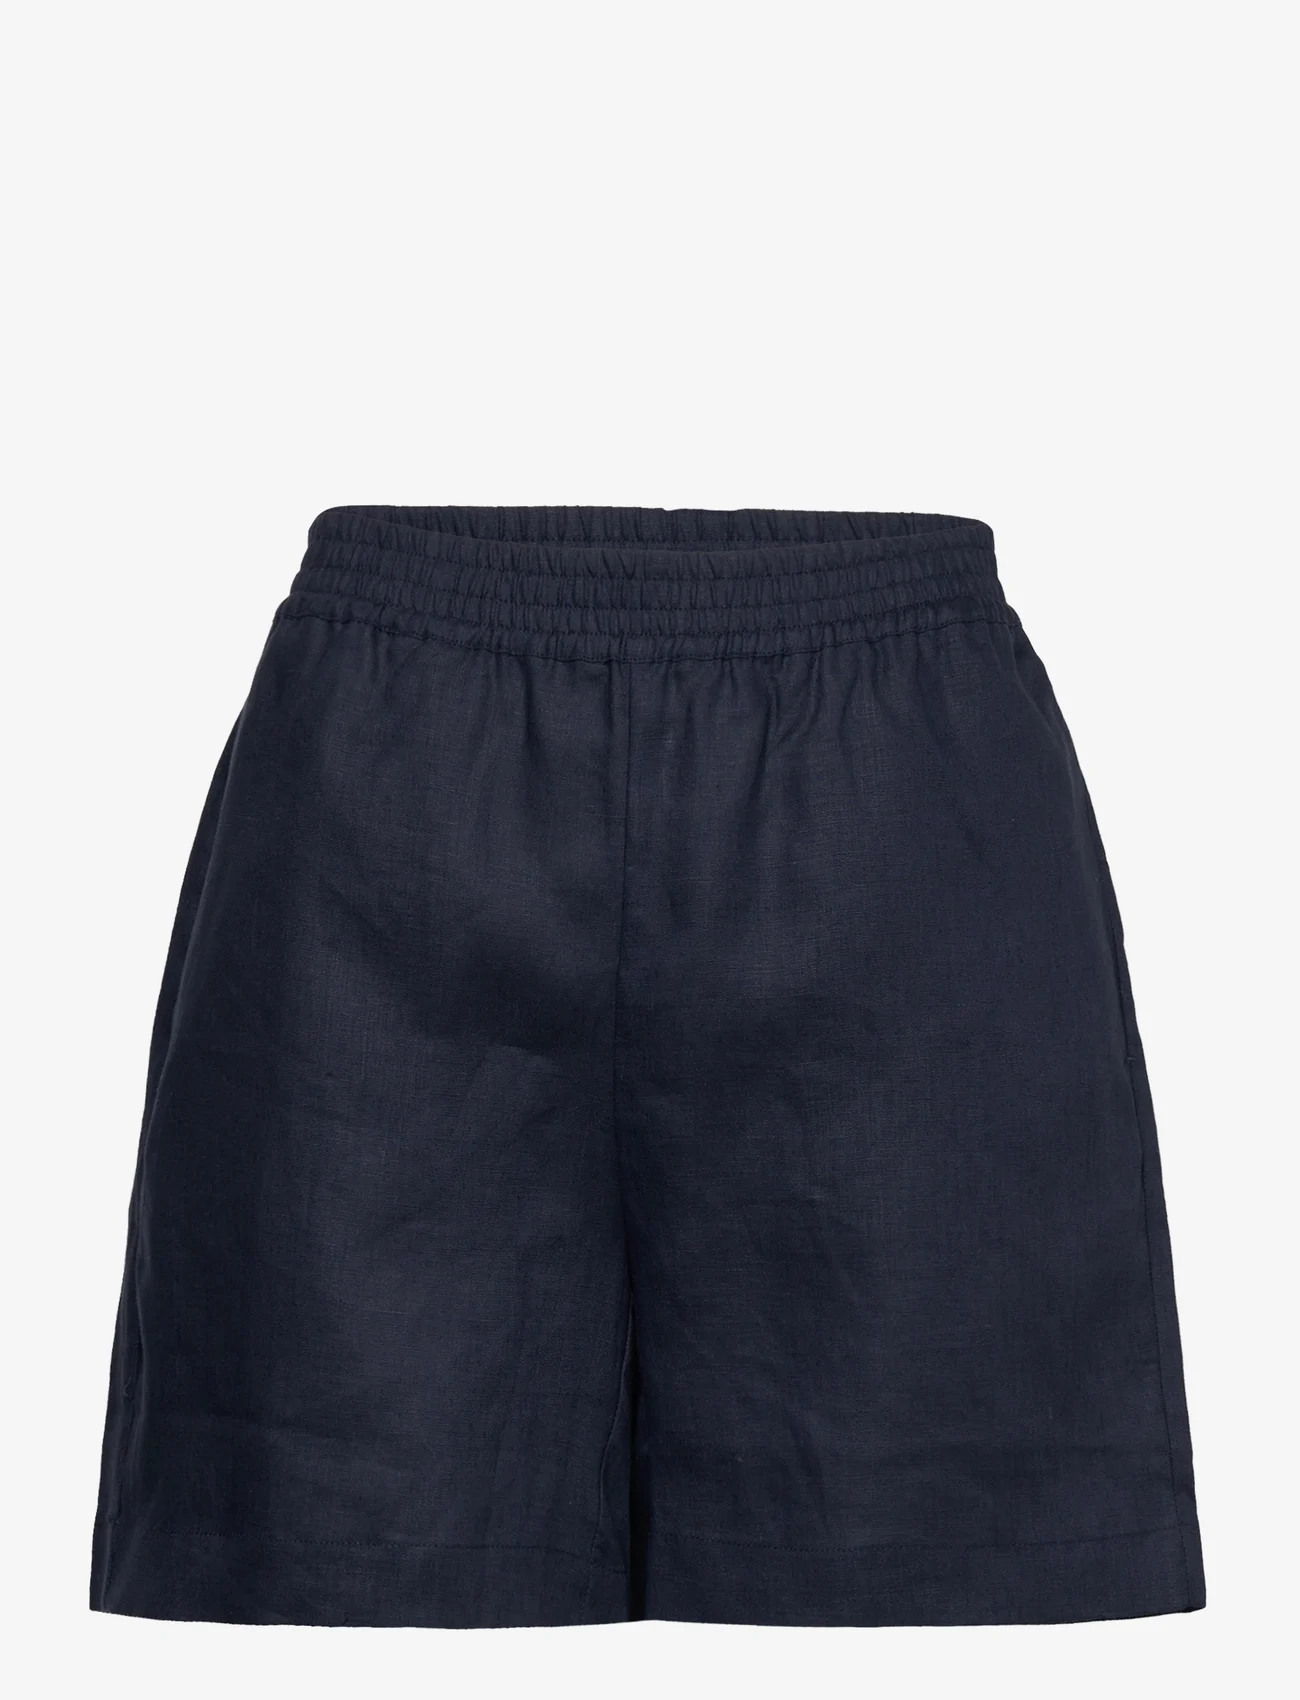 Rosemunde - Linen shorts - casual shorts - navy - 0